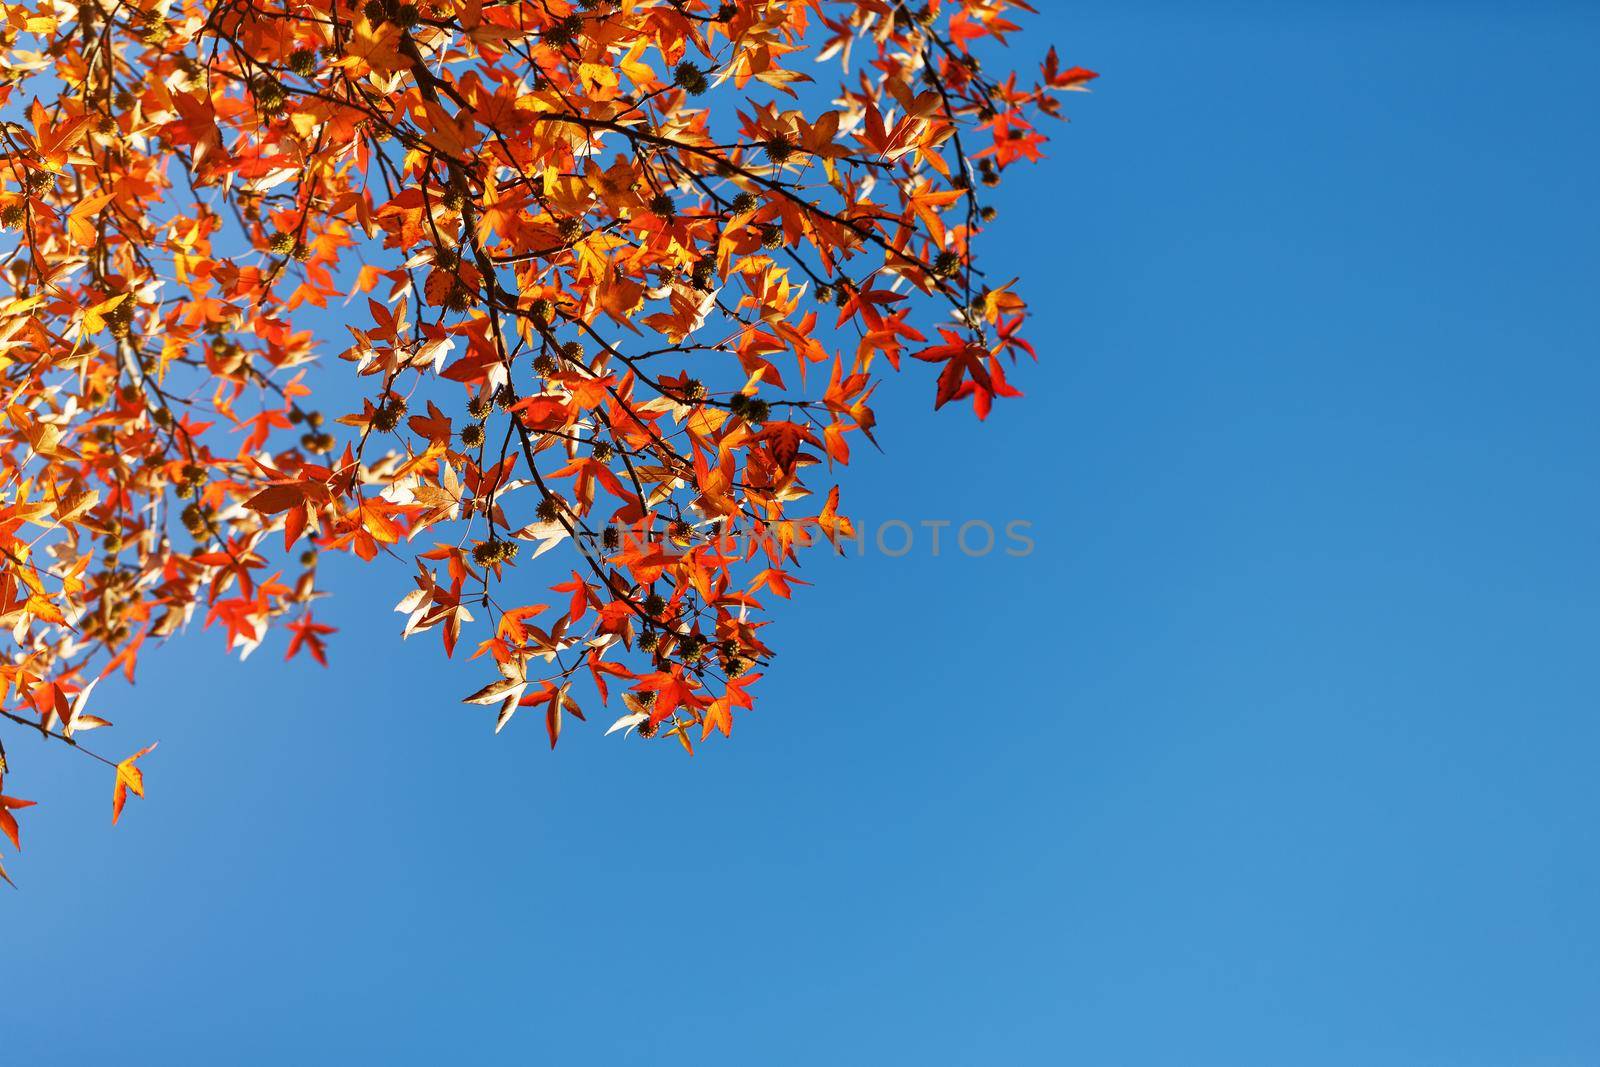 Autumn foliage, old orange maple leaves, dry foliage of trees, soft focus, autumn season, nature change, bright soft sunlight Abstract autumn background.